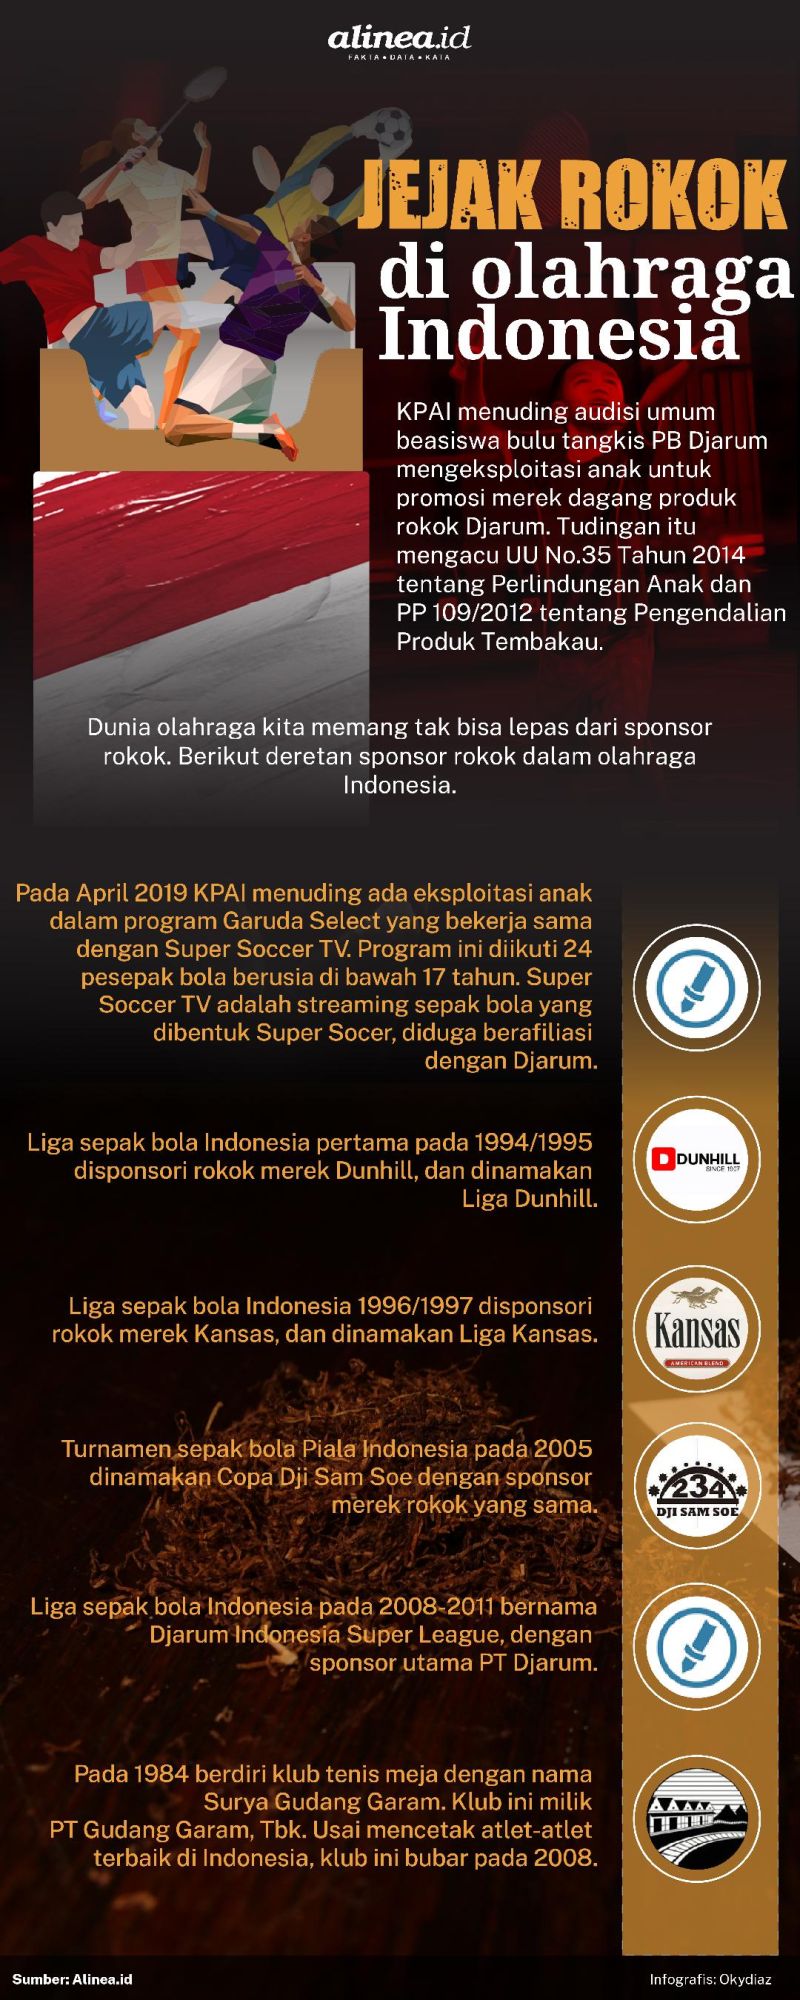 Sejak dahulu rokok mendanai sejumlah even olahraga di Indonesia. Alinea.id/Oky Diaz.